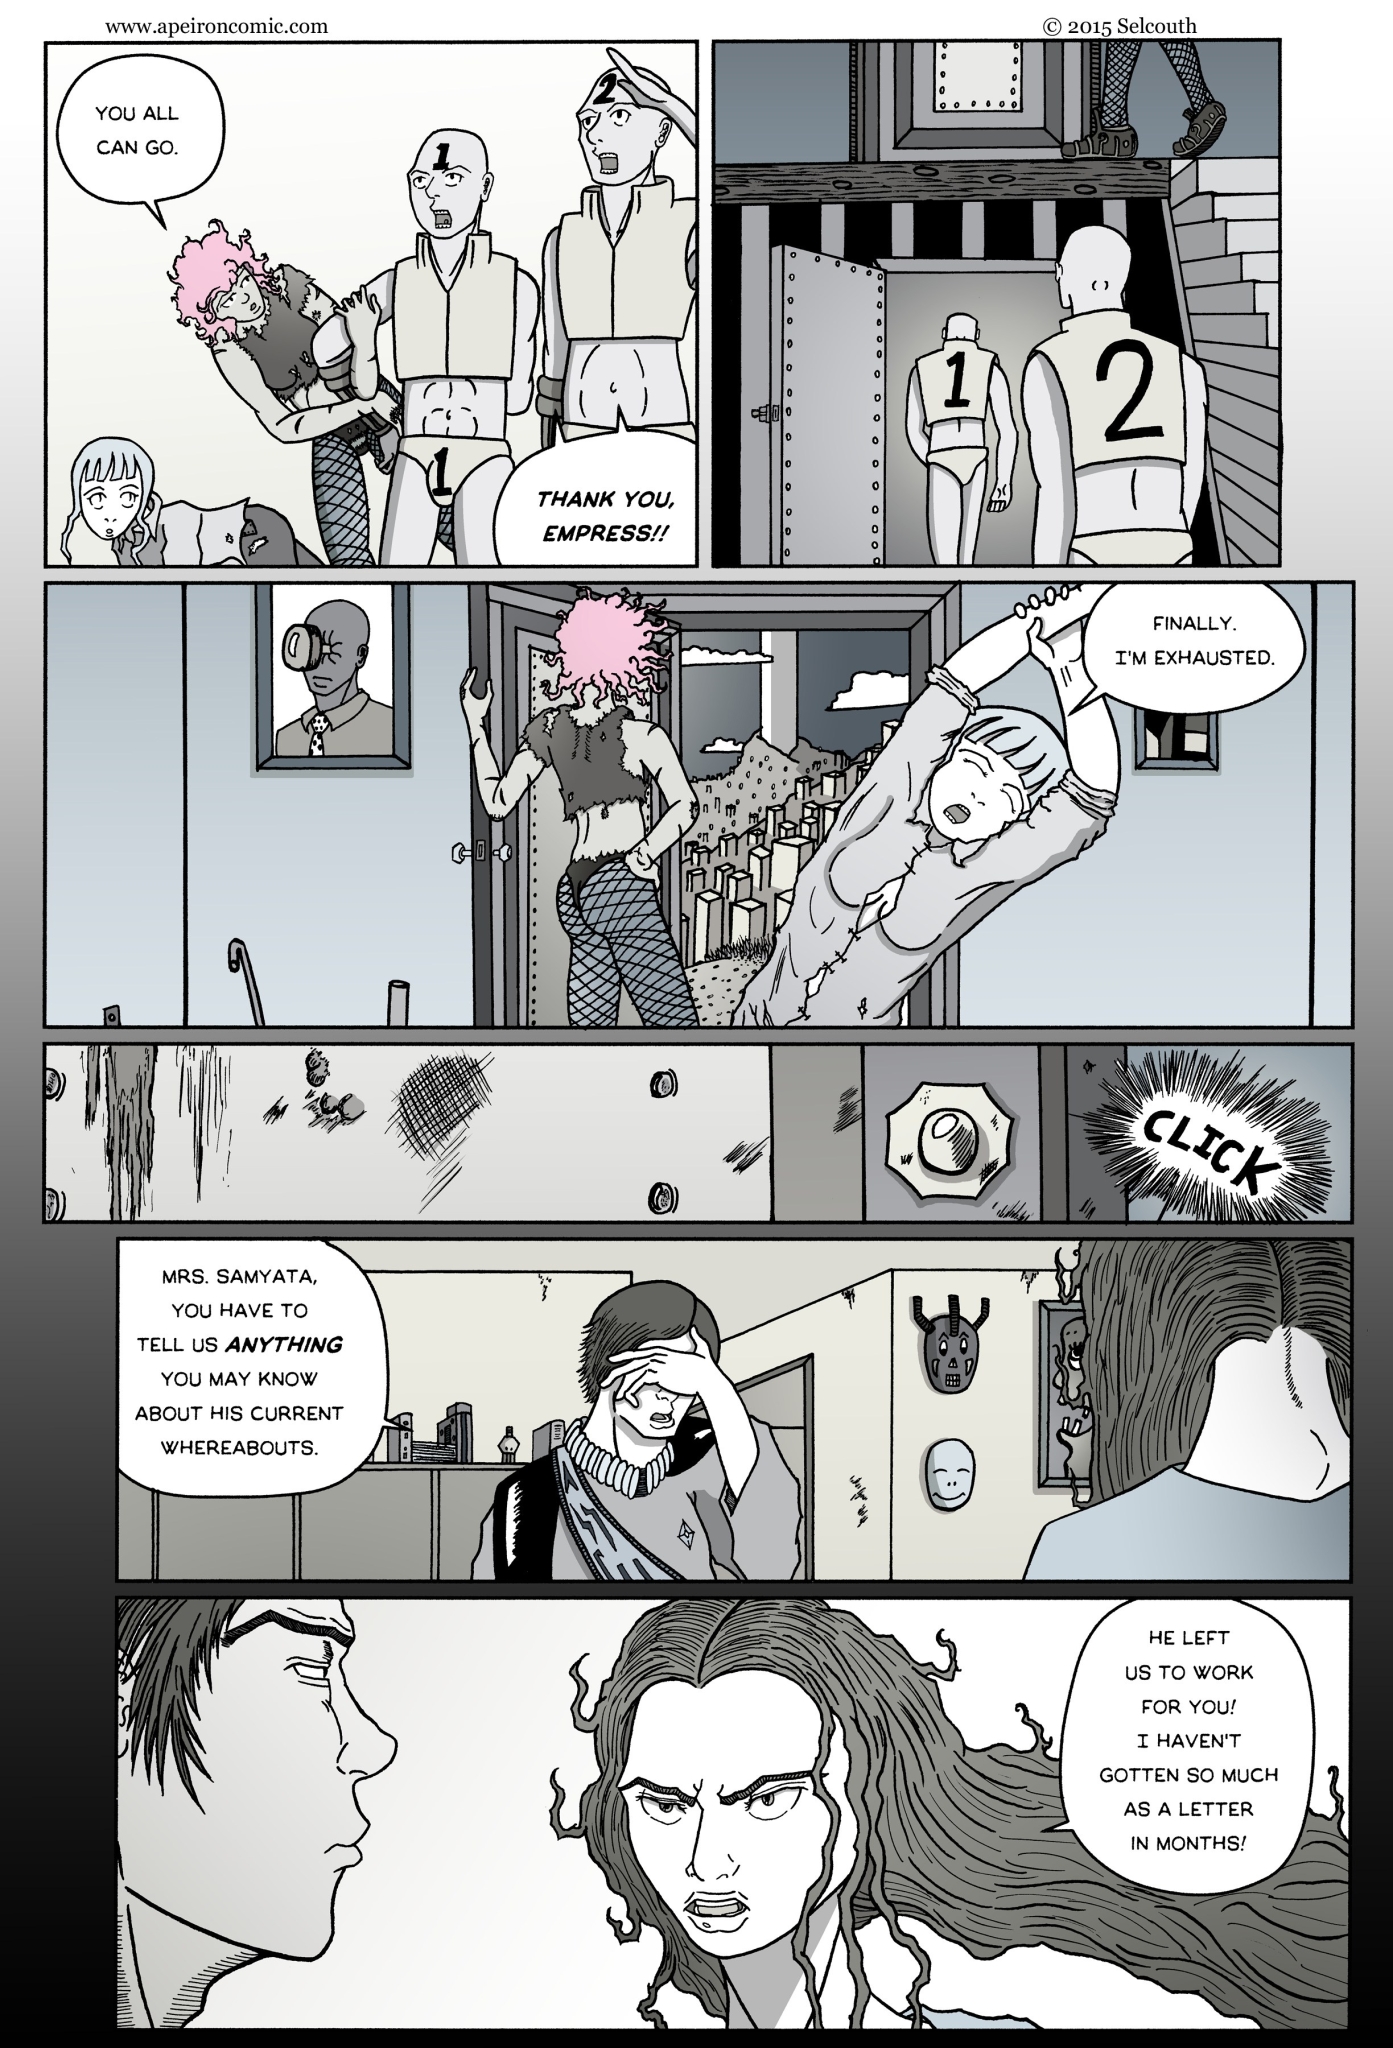 Apeiron Comic: Chapter 02 Page 35